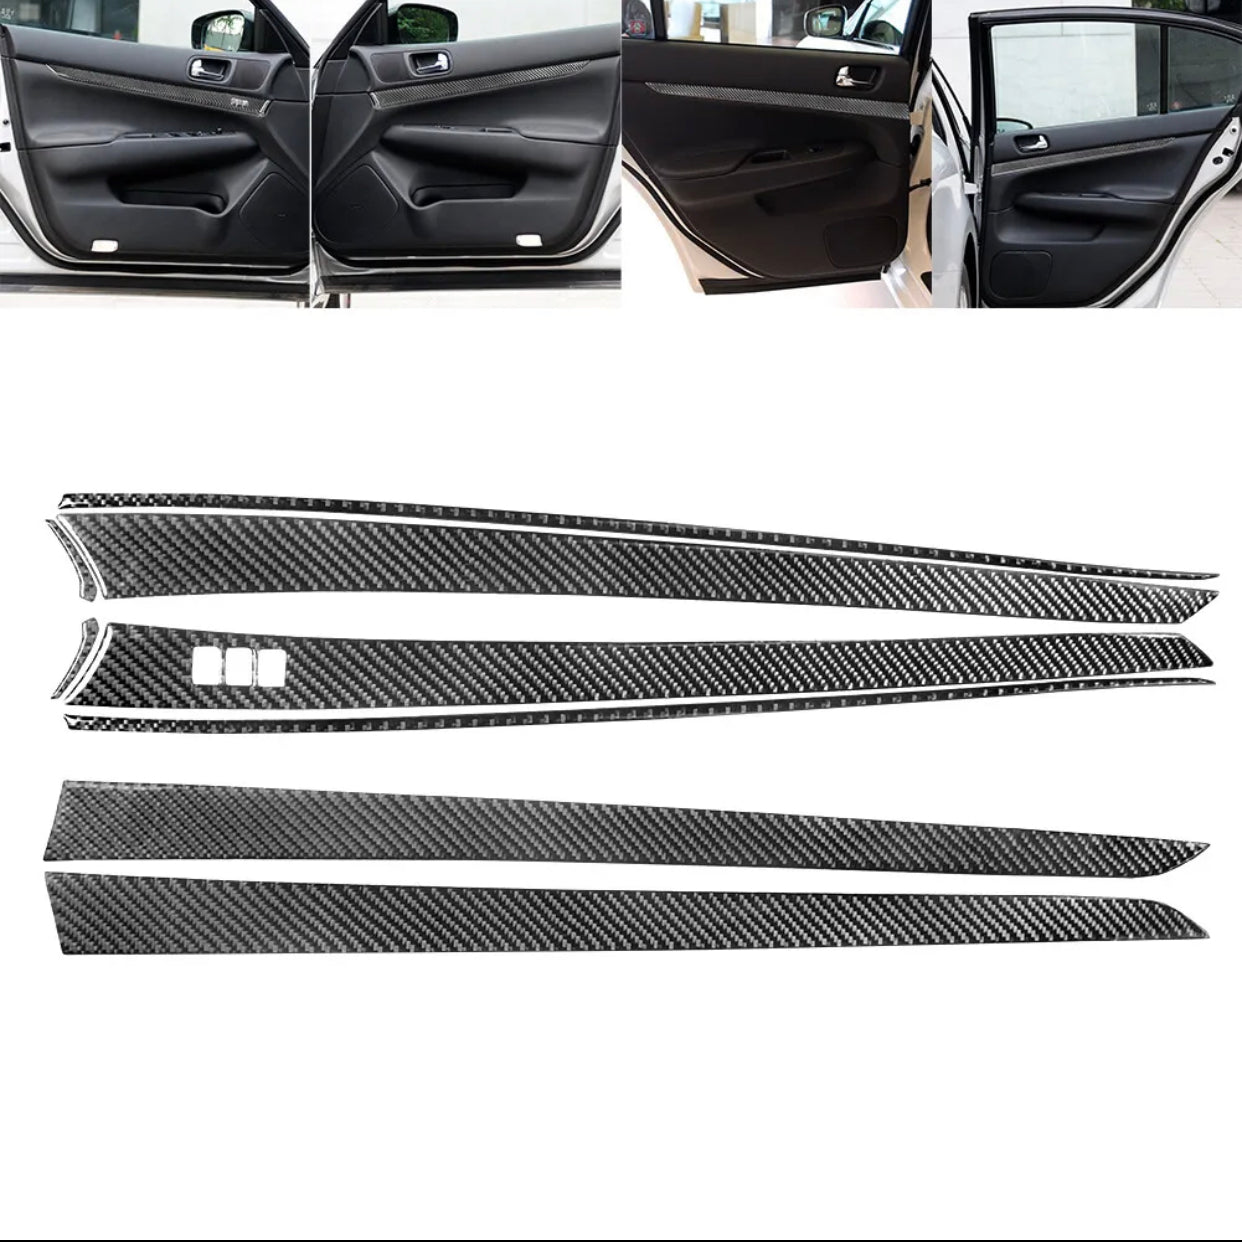 22Pcs Carbon Fiber Full Interior Kit Cover Trim For Infiniti G37 Sedan 2010-2013